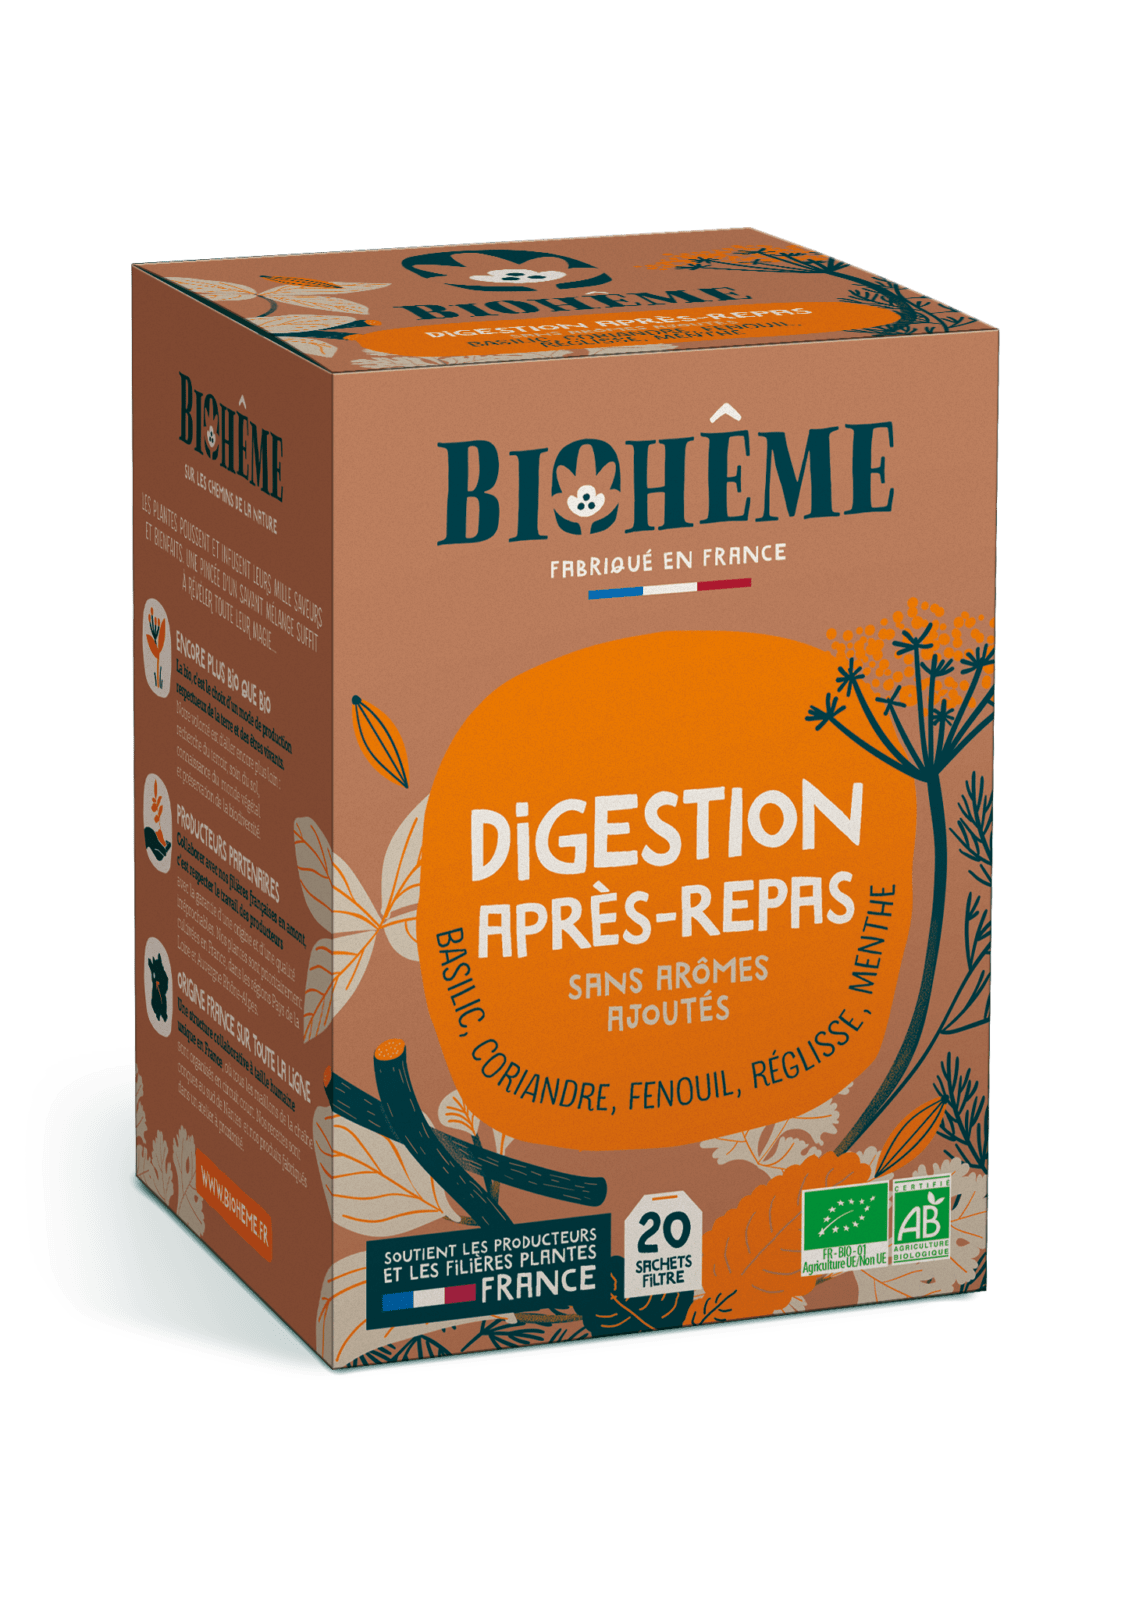 Tisane bio Digest'plus - digestion, confort digestif - Agriculture France